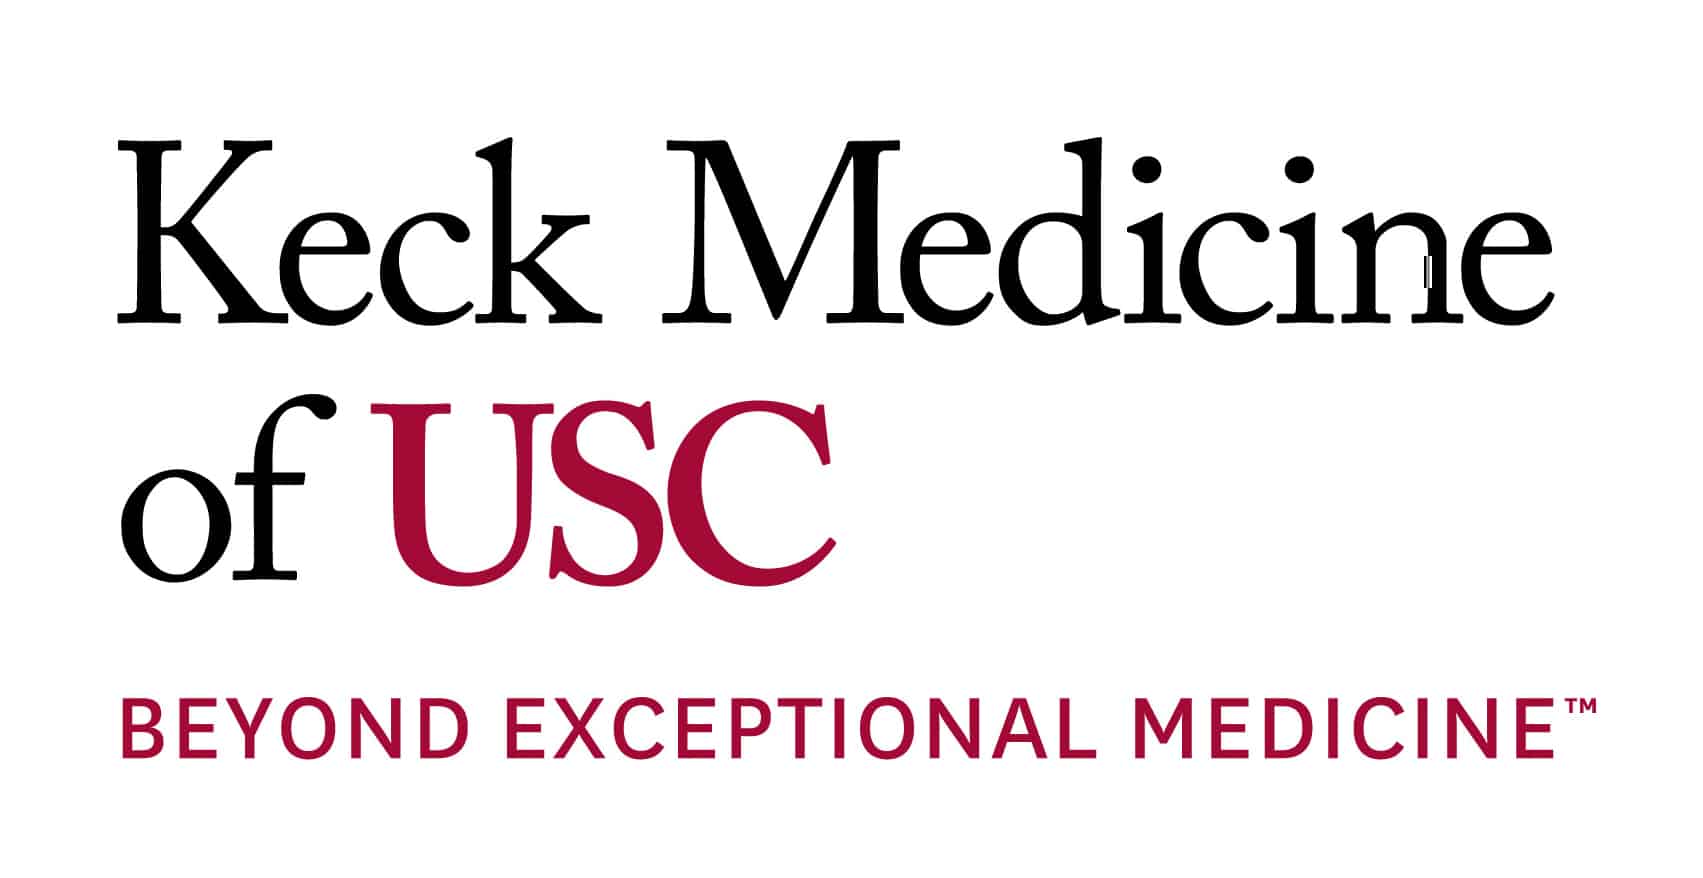 Keck Medicine of USC